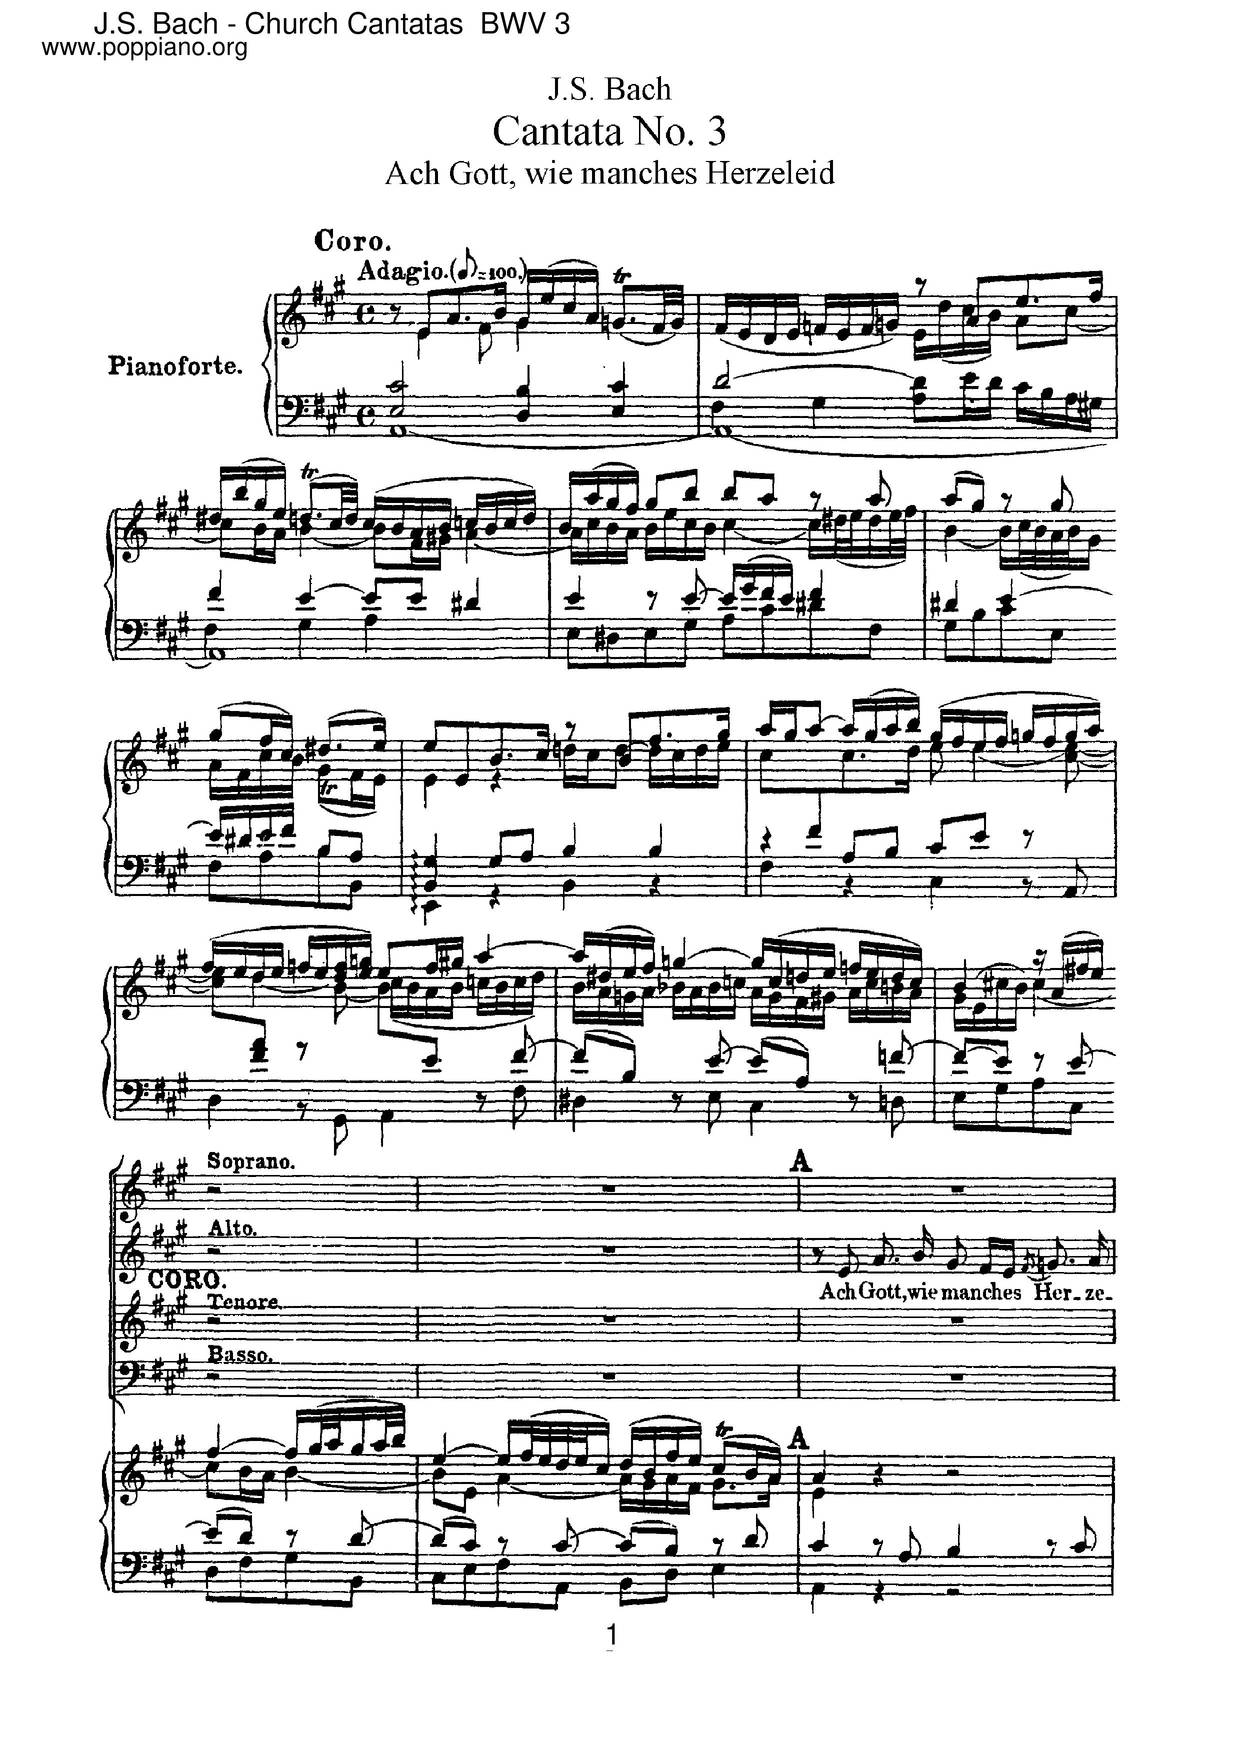 Oh God, How Much Heartache, BWV 3 Score